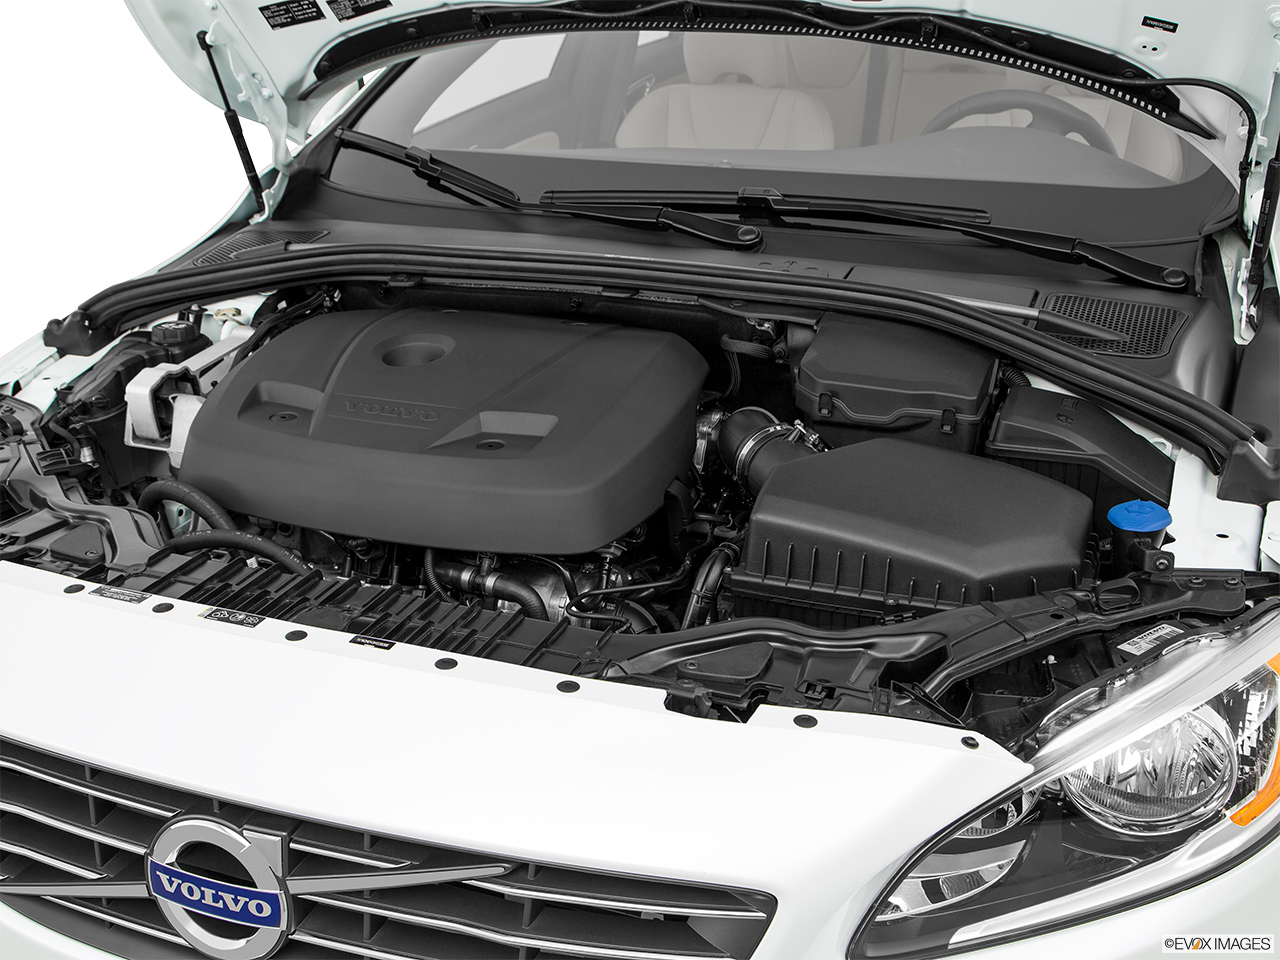 2017 Volvo V60 T5 Premier Engine. 